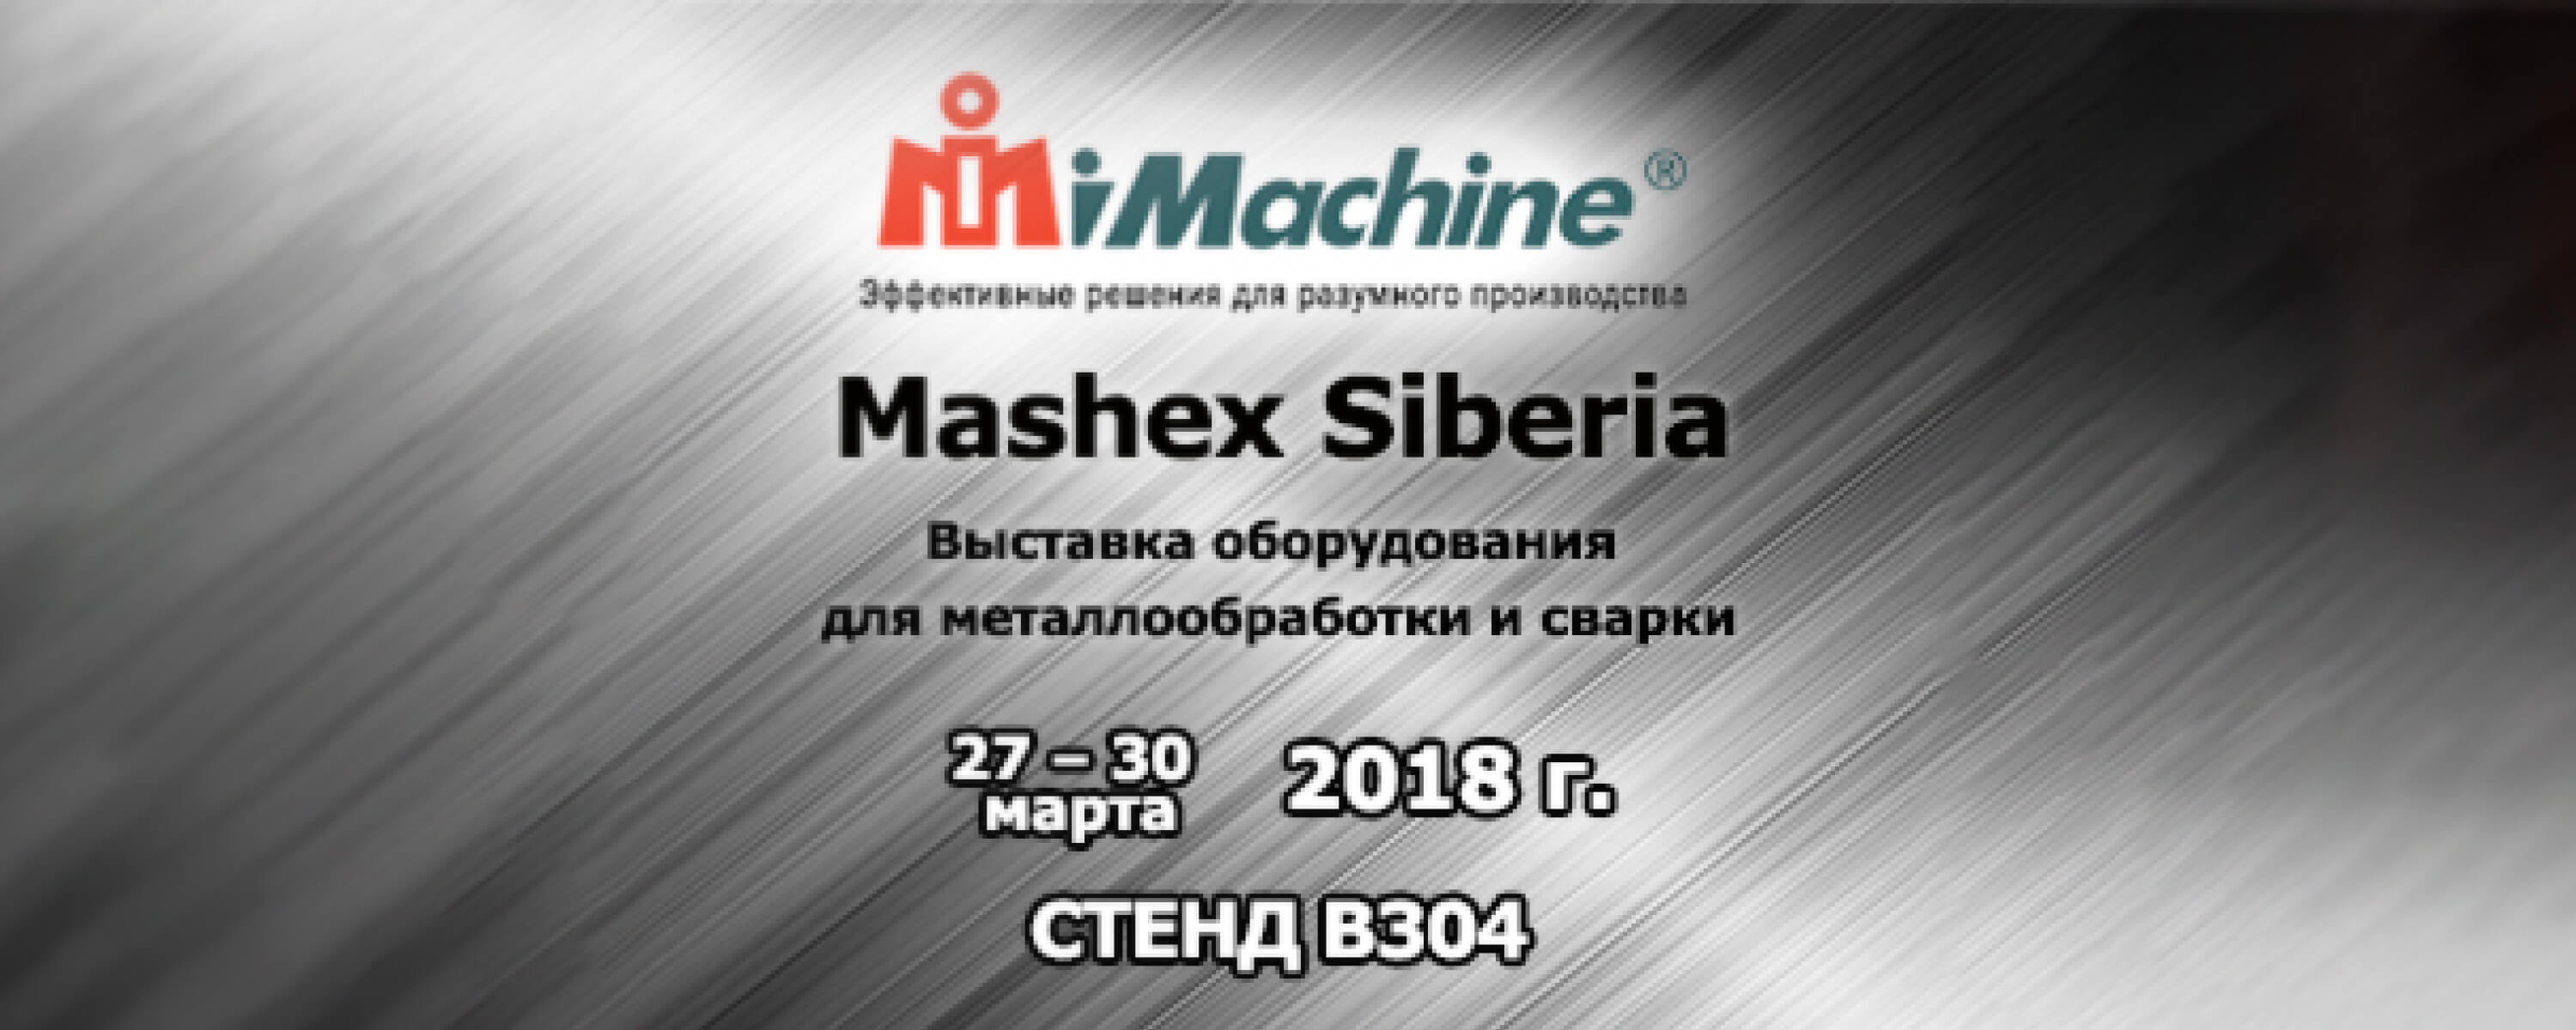 Приглашаем Вас на выставку Mashex Siberia 2018!